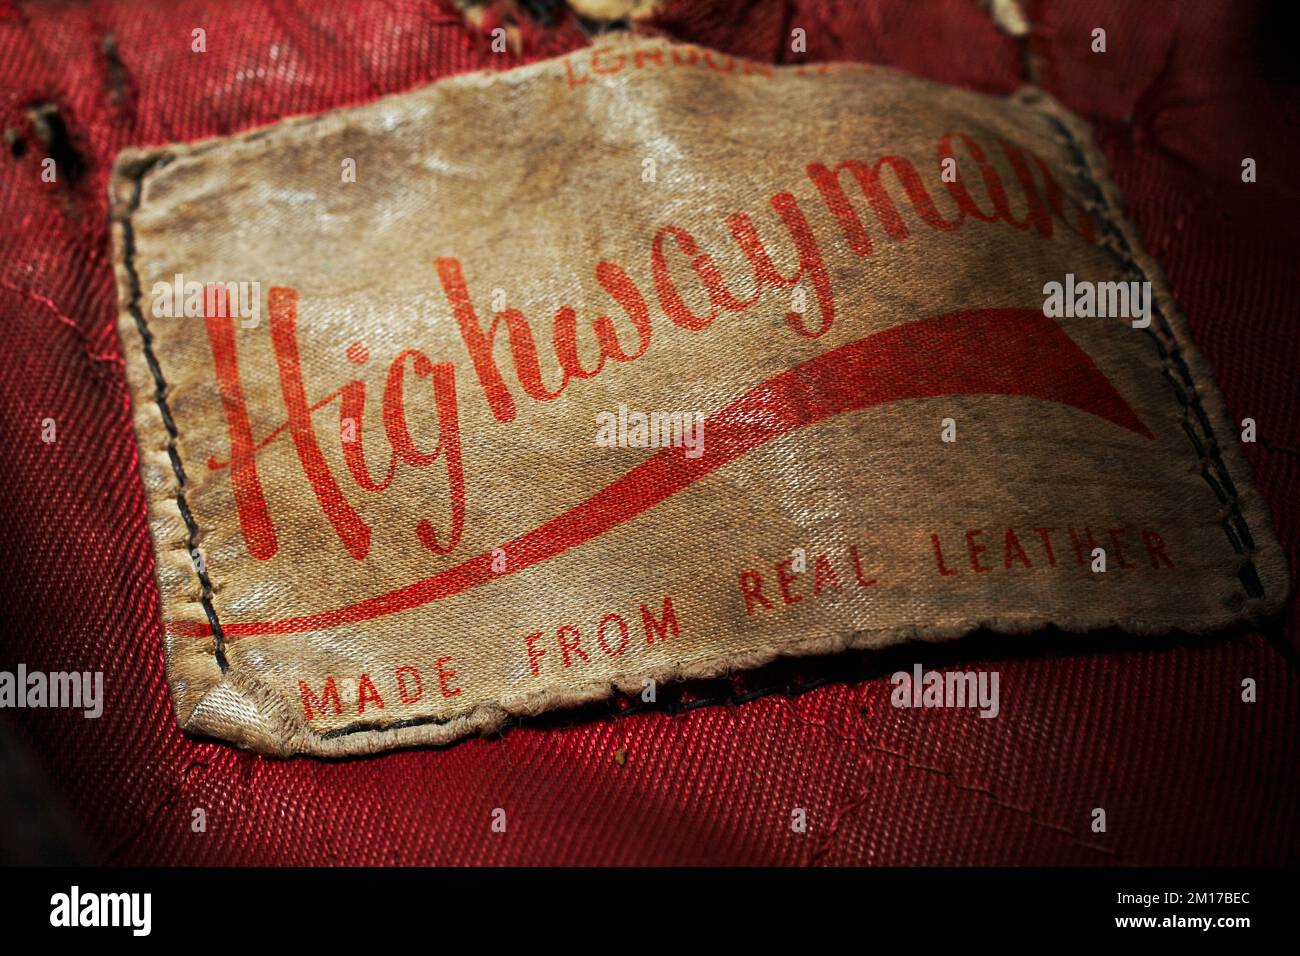 Highwayman-Label in einer Lewis Lederjacke. Stockfoto